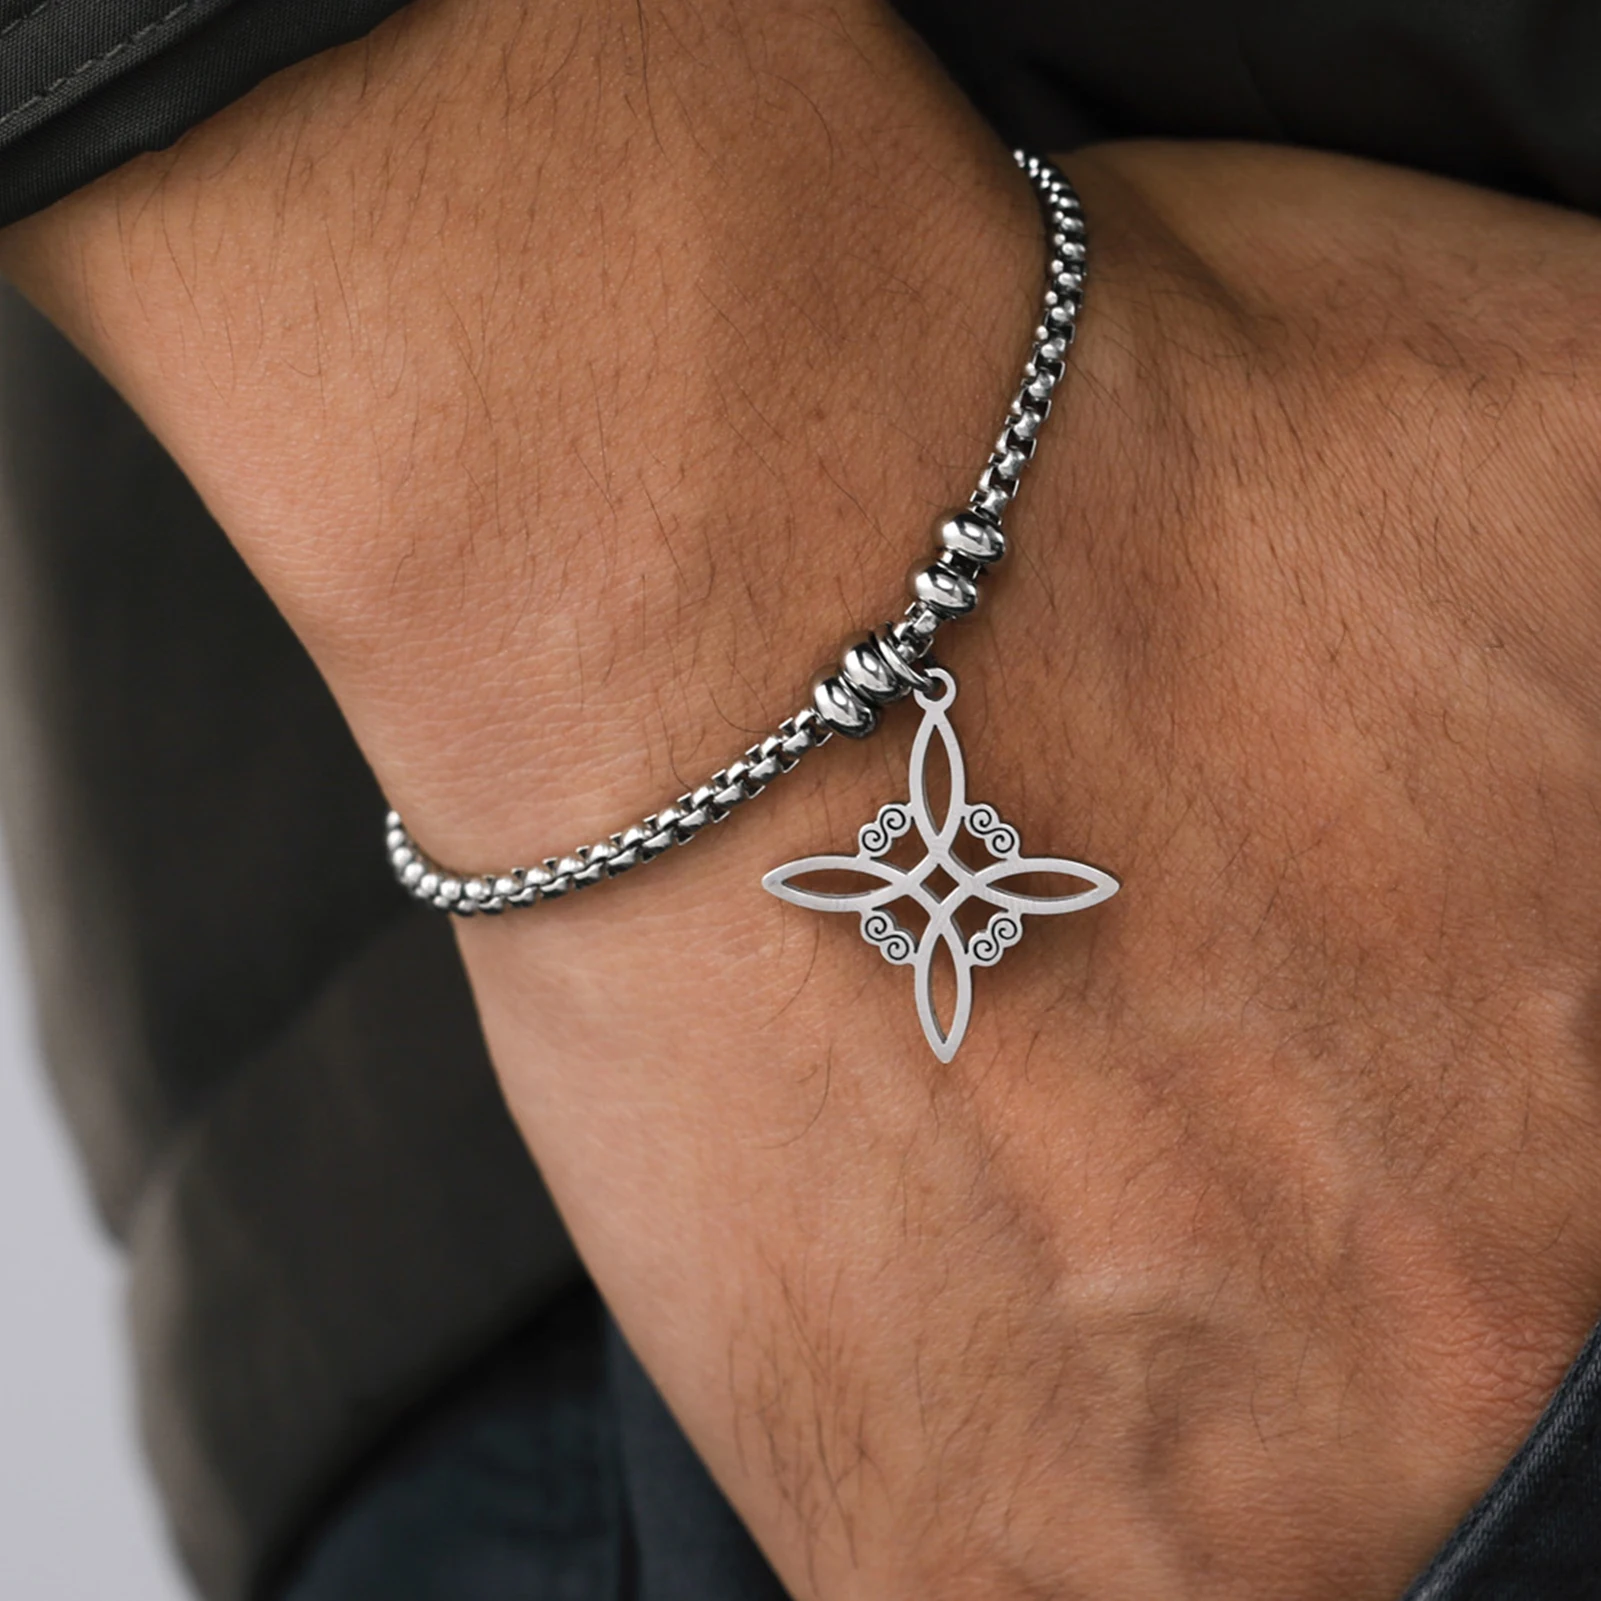 Wicca Stainless Steel Celtics Knot Bracelet for Men Women Silver Color Witch Irish Knot Bracelets Geometric Witchcraft Jewelry